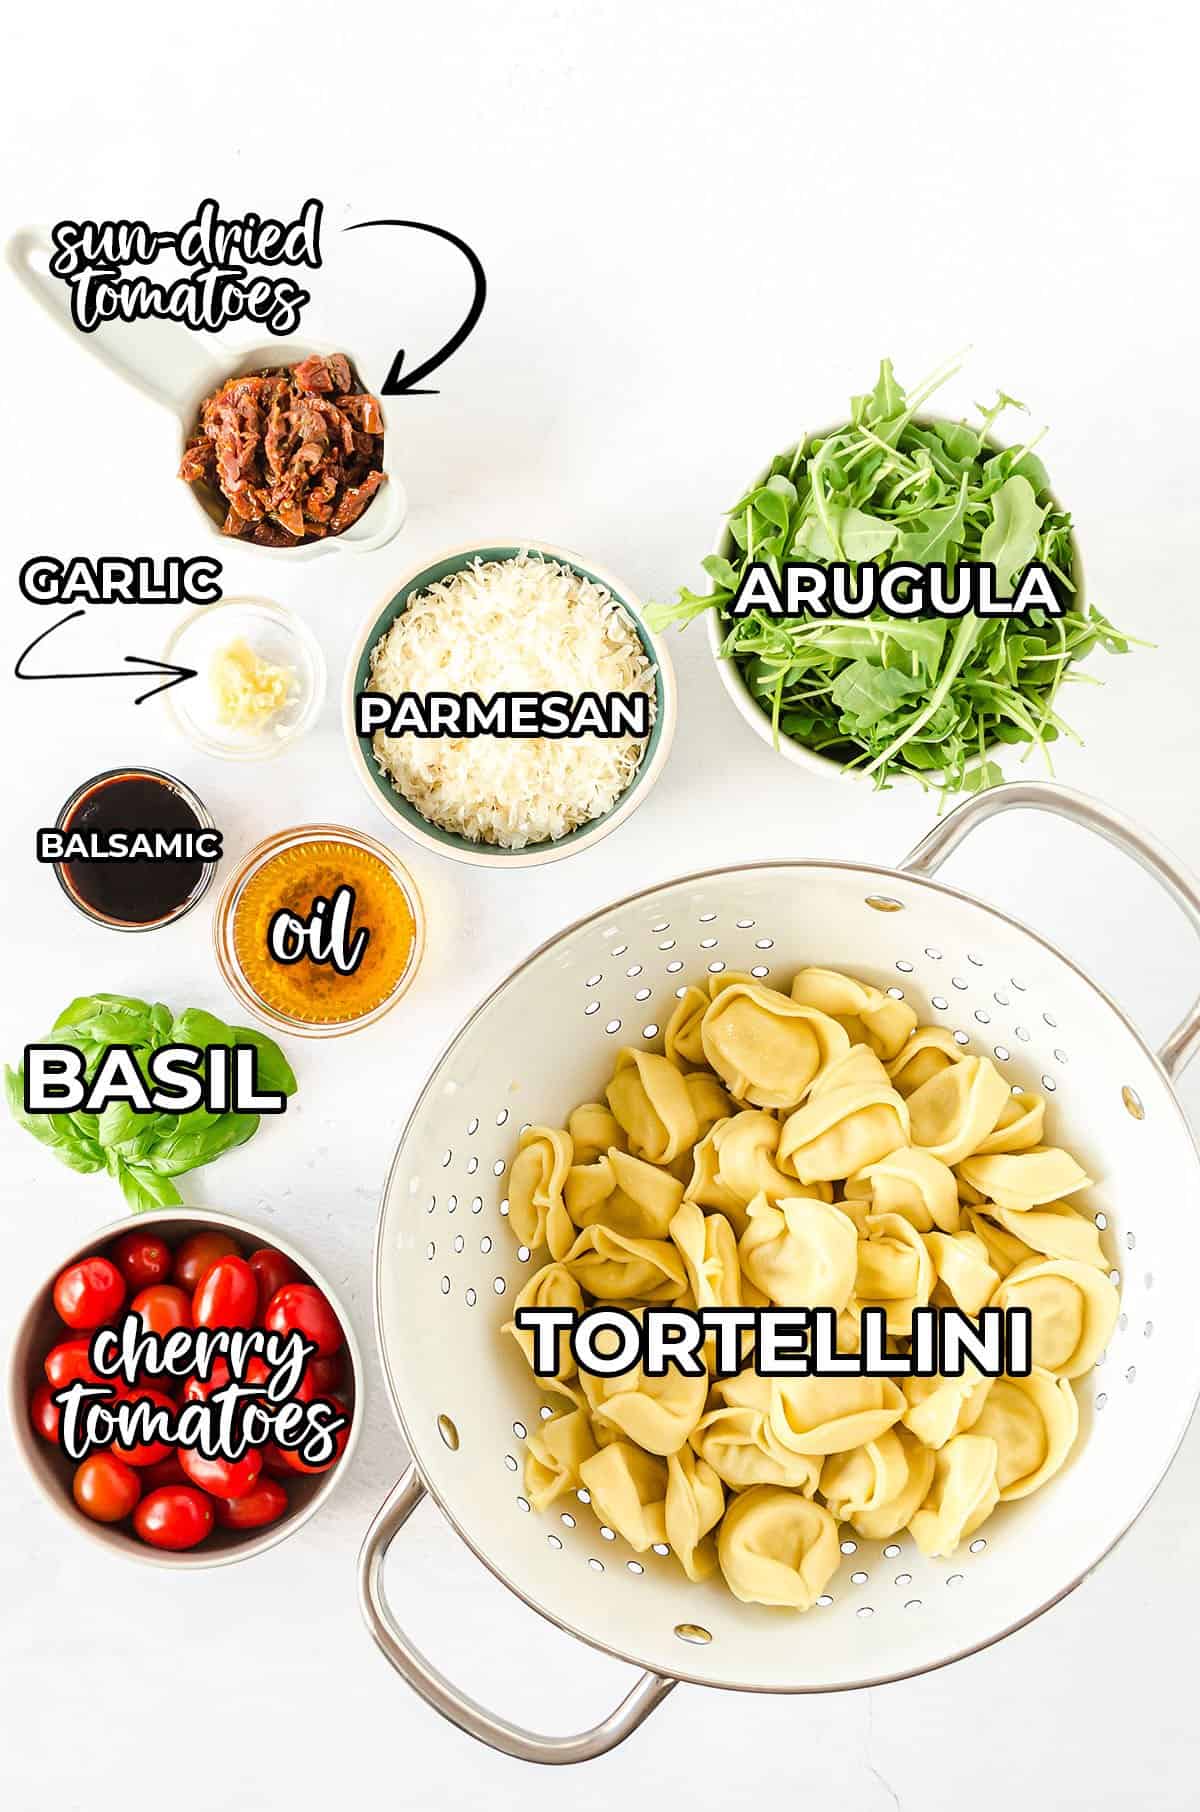 ingredients for tortellini salad.